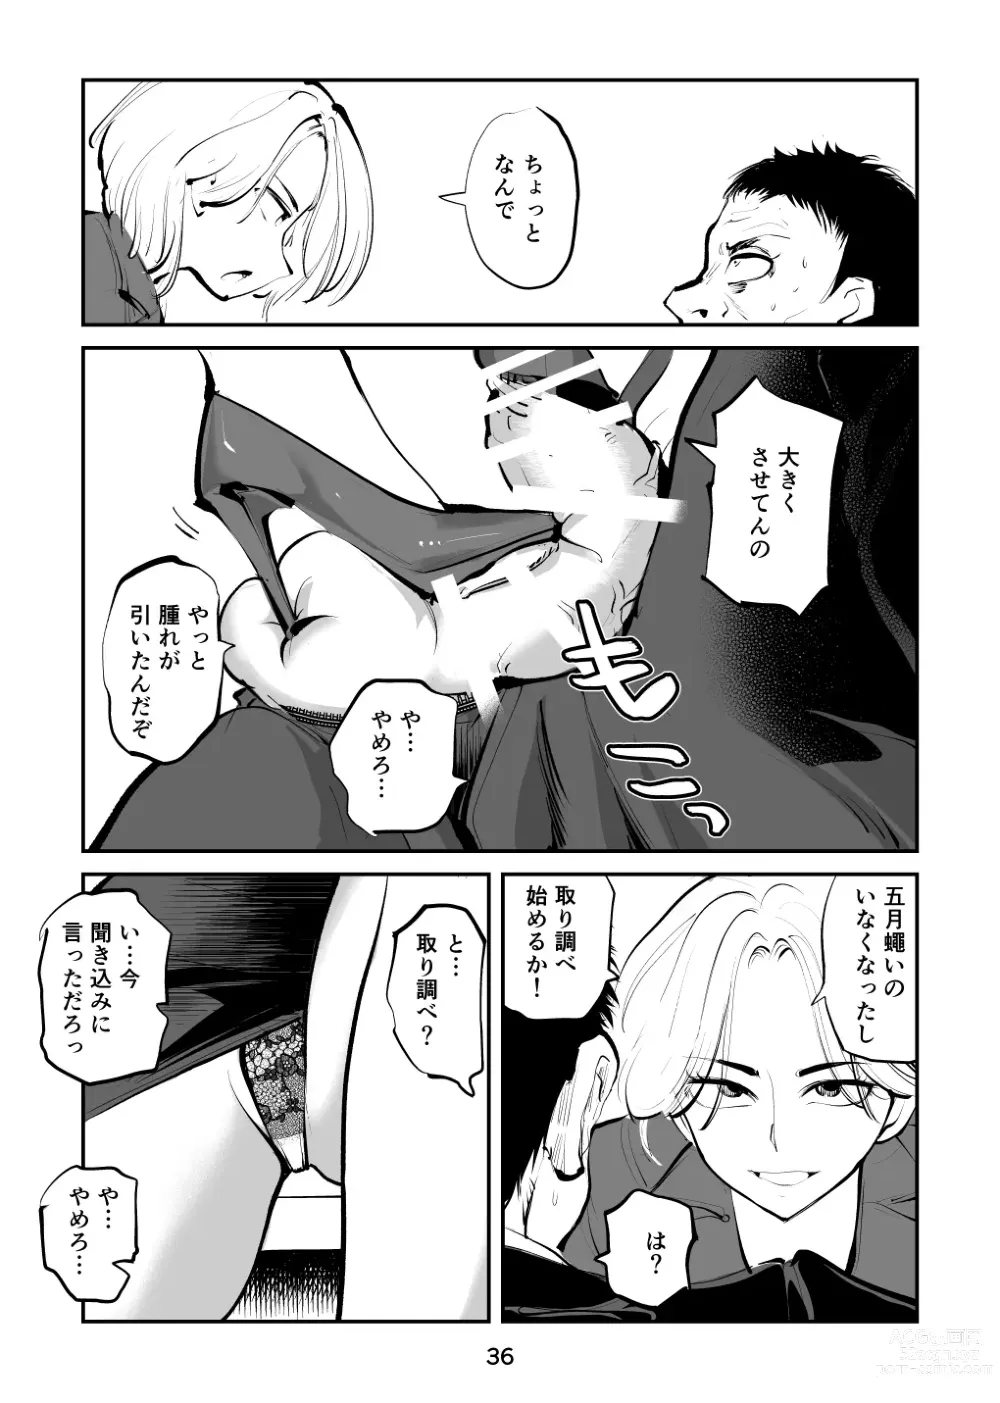 Page 36 of doujinshi Kinkeri onna keiji ryōko